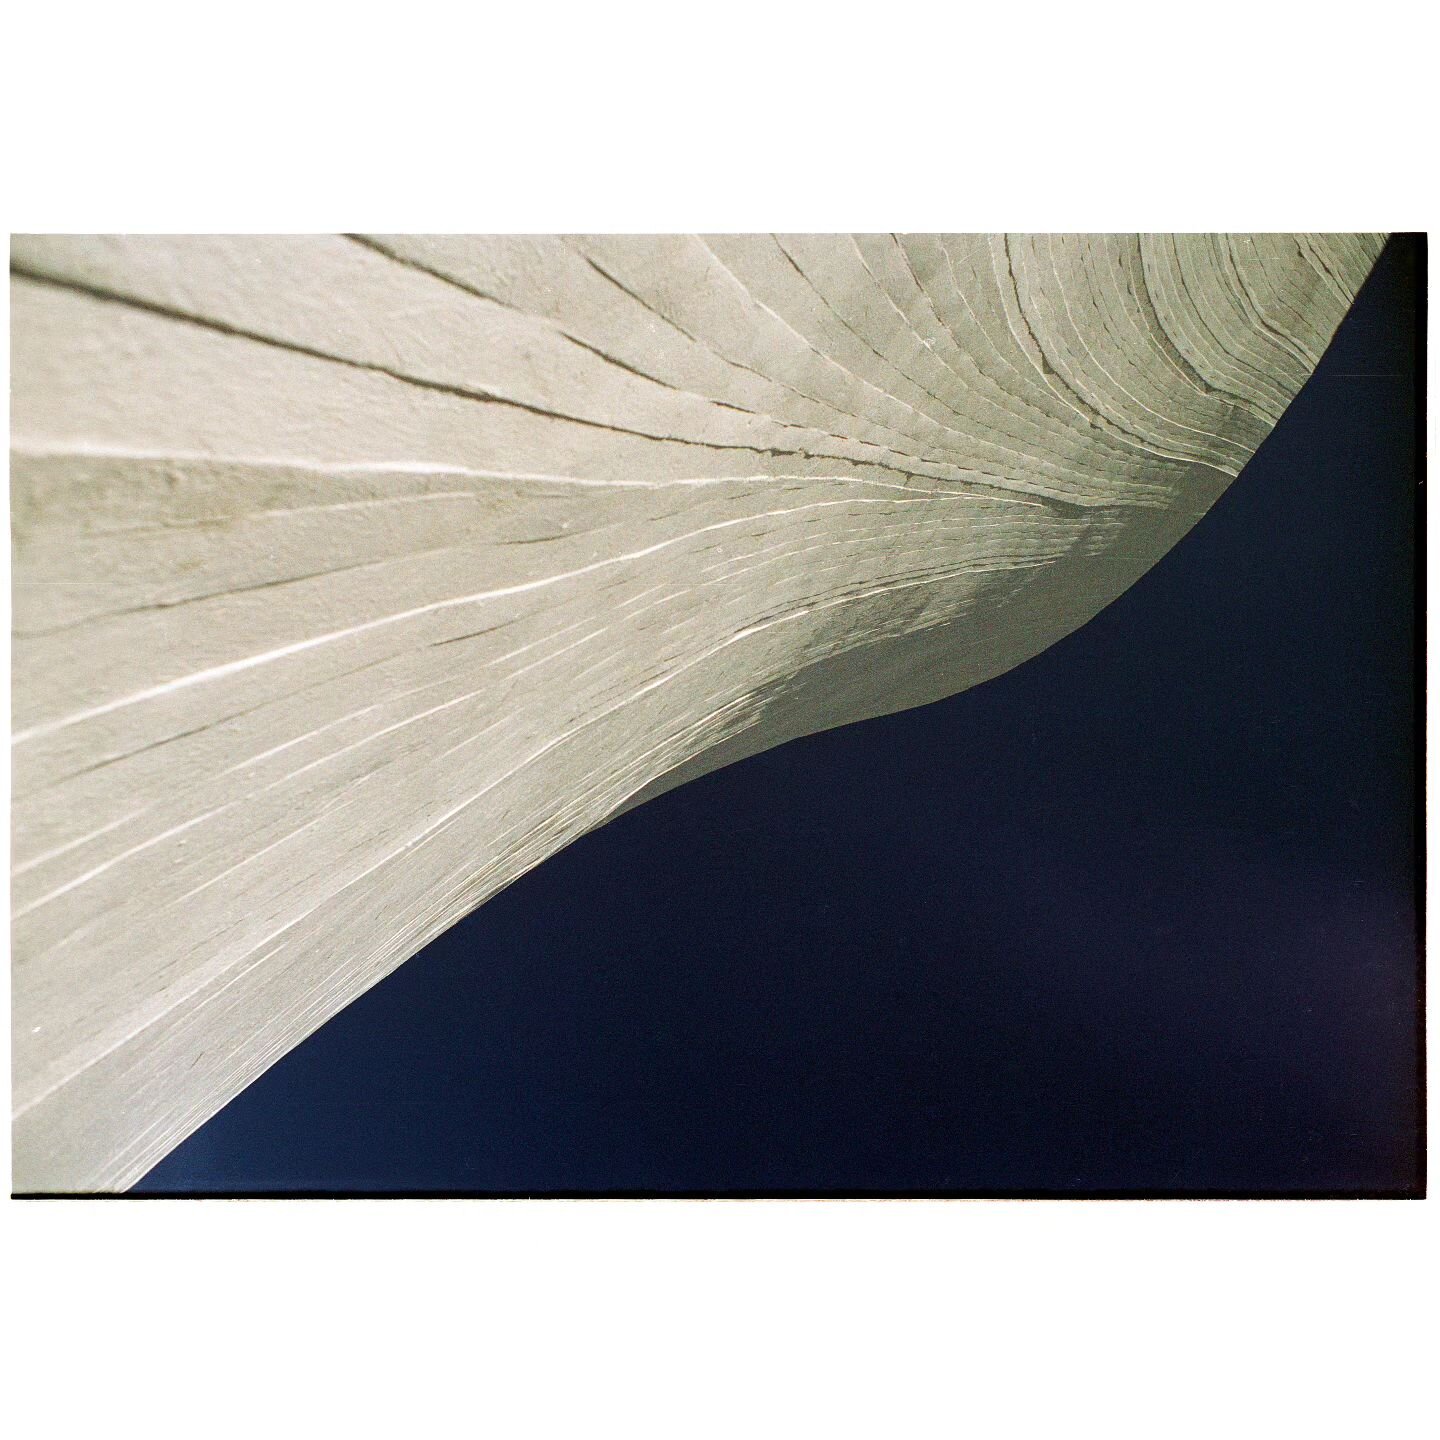 Le Volcan, by Oscar Niemeyer

Digitized colour negative film - 2004

#lehavre #volcan #normandie #architecture #oscarniemeyer #niemeyer #levolcan #photographer #analogphotography #kodakfilm #kodak @levolcan76 @lh_lehavre